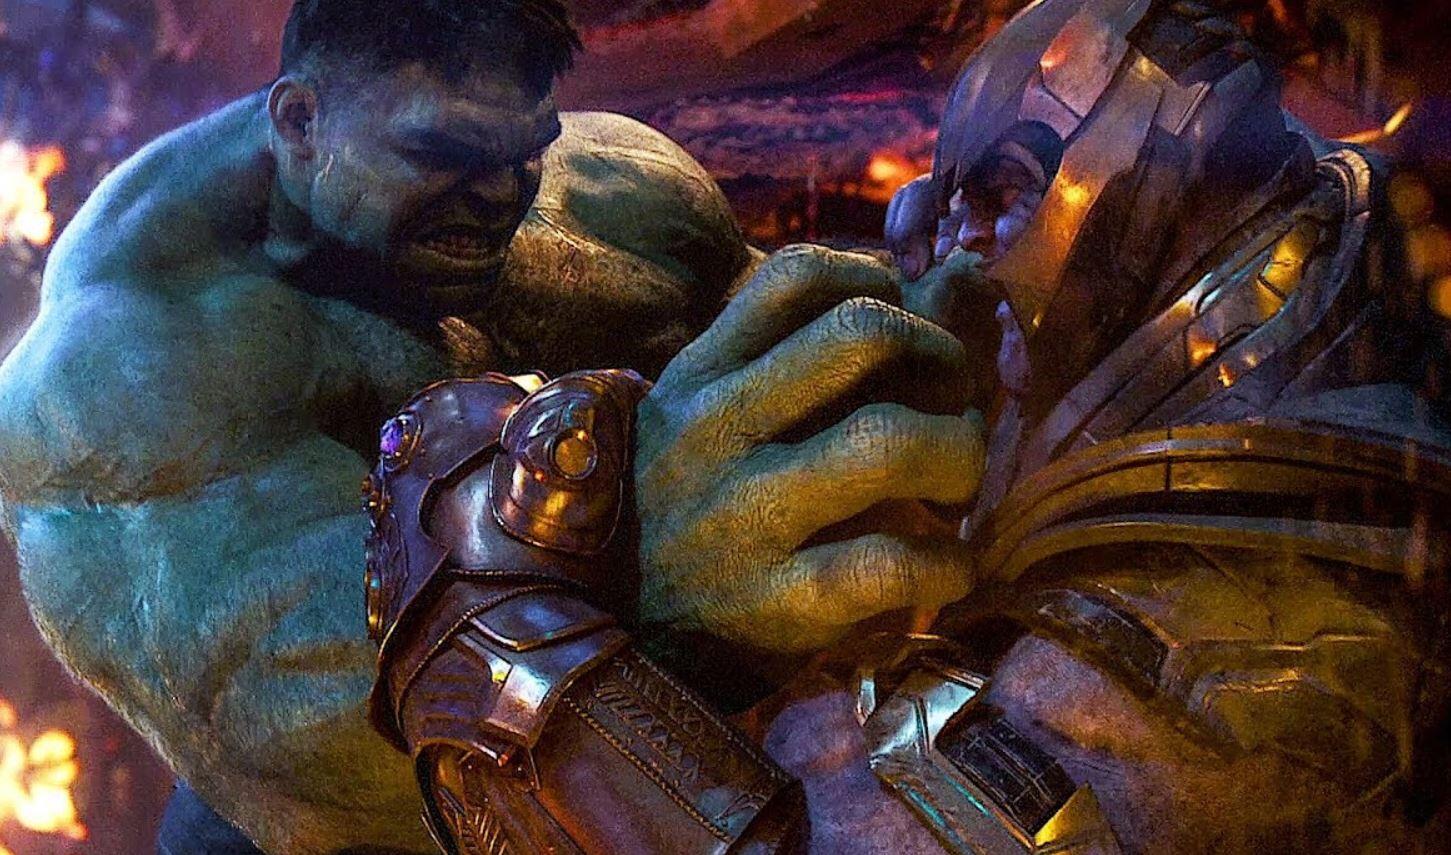 Avengers Endgame Concept Art Reveals Hulk Vs Thanos Rematch